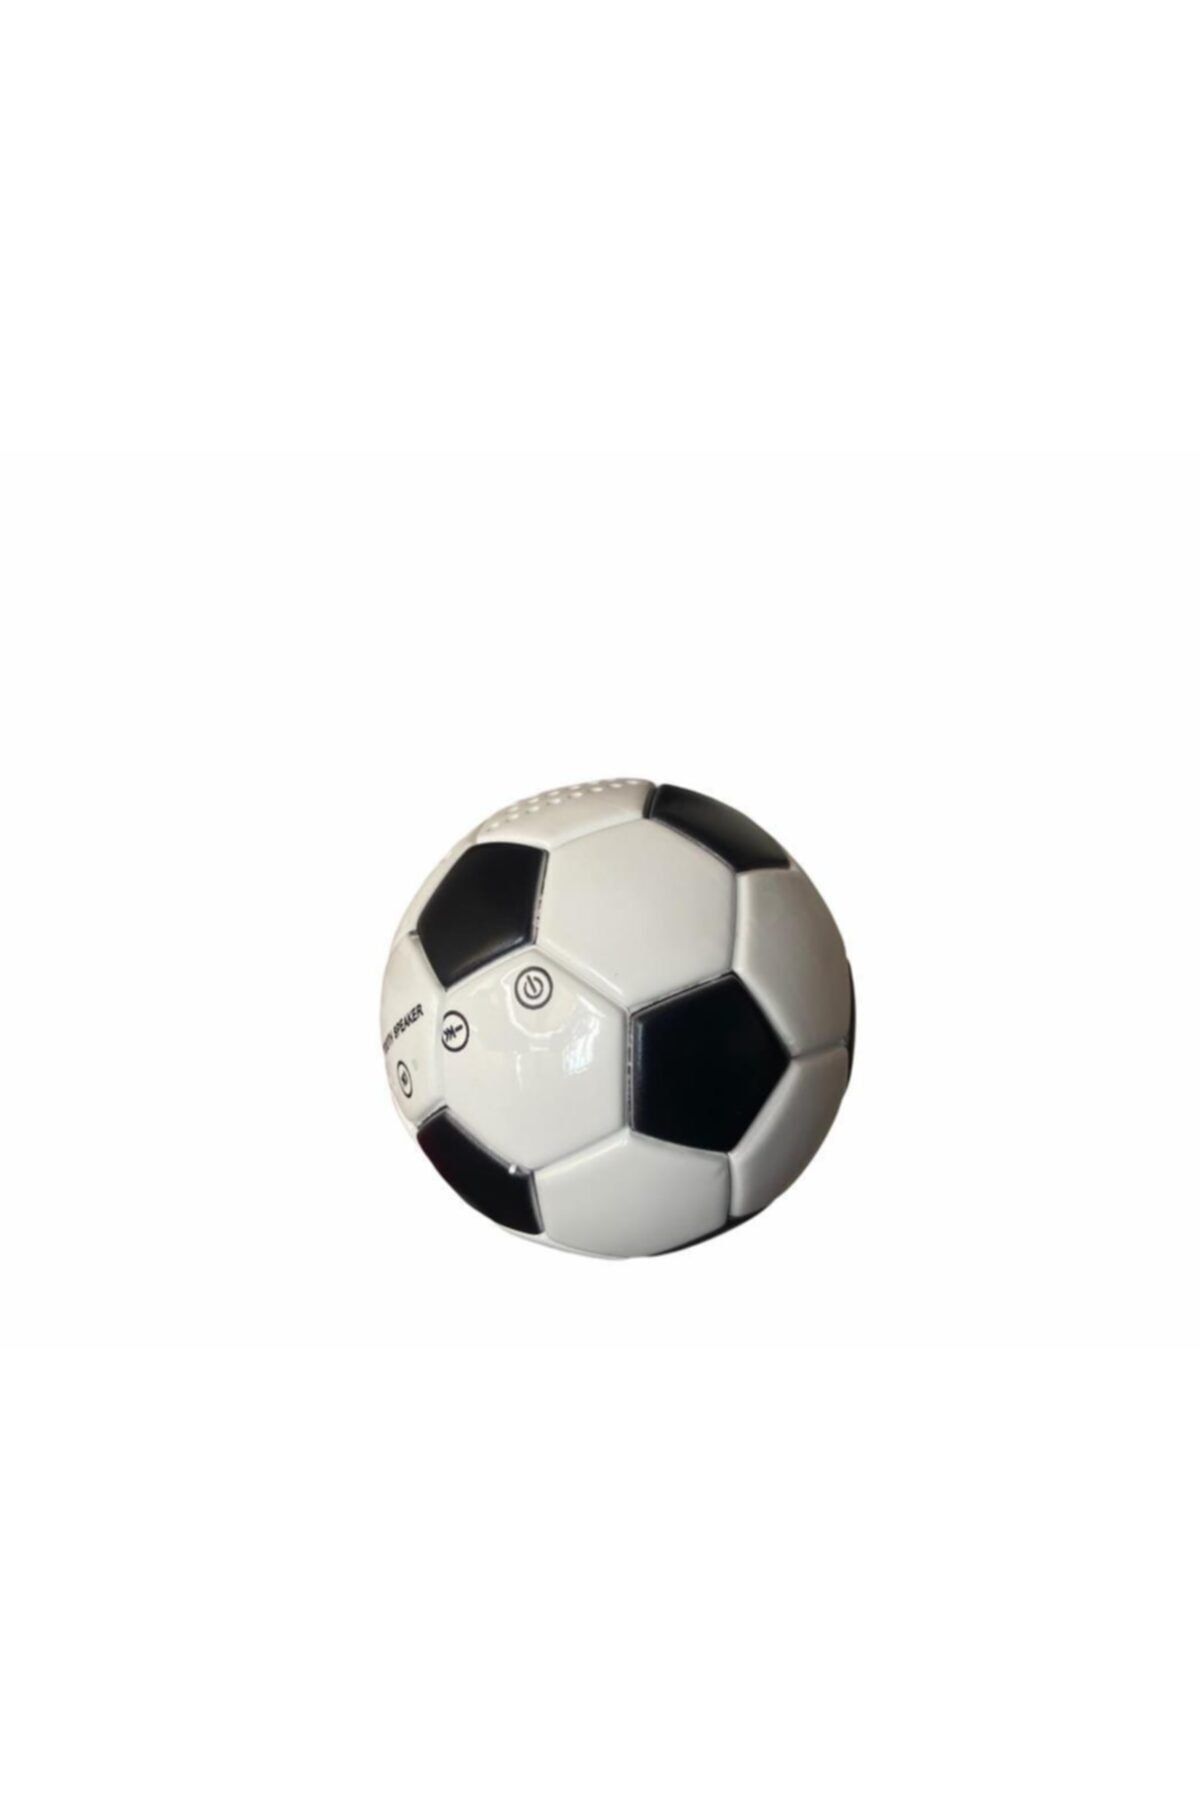 Doppler Siyah Beyaz Mini Futbol Topu Kablosuz Bluetooth Hoparlör